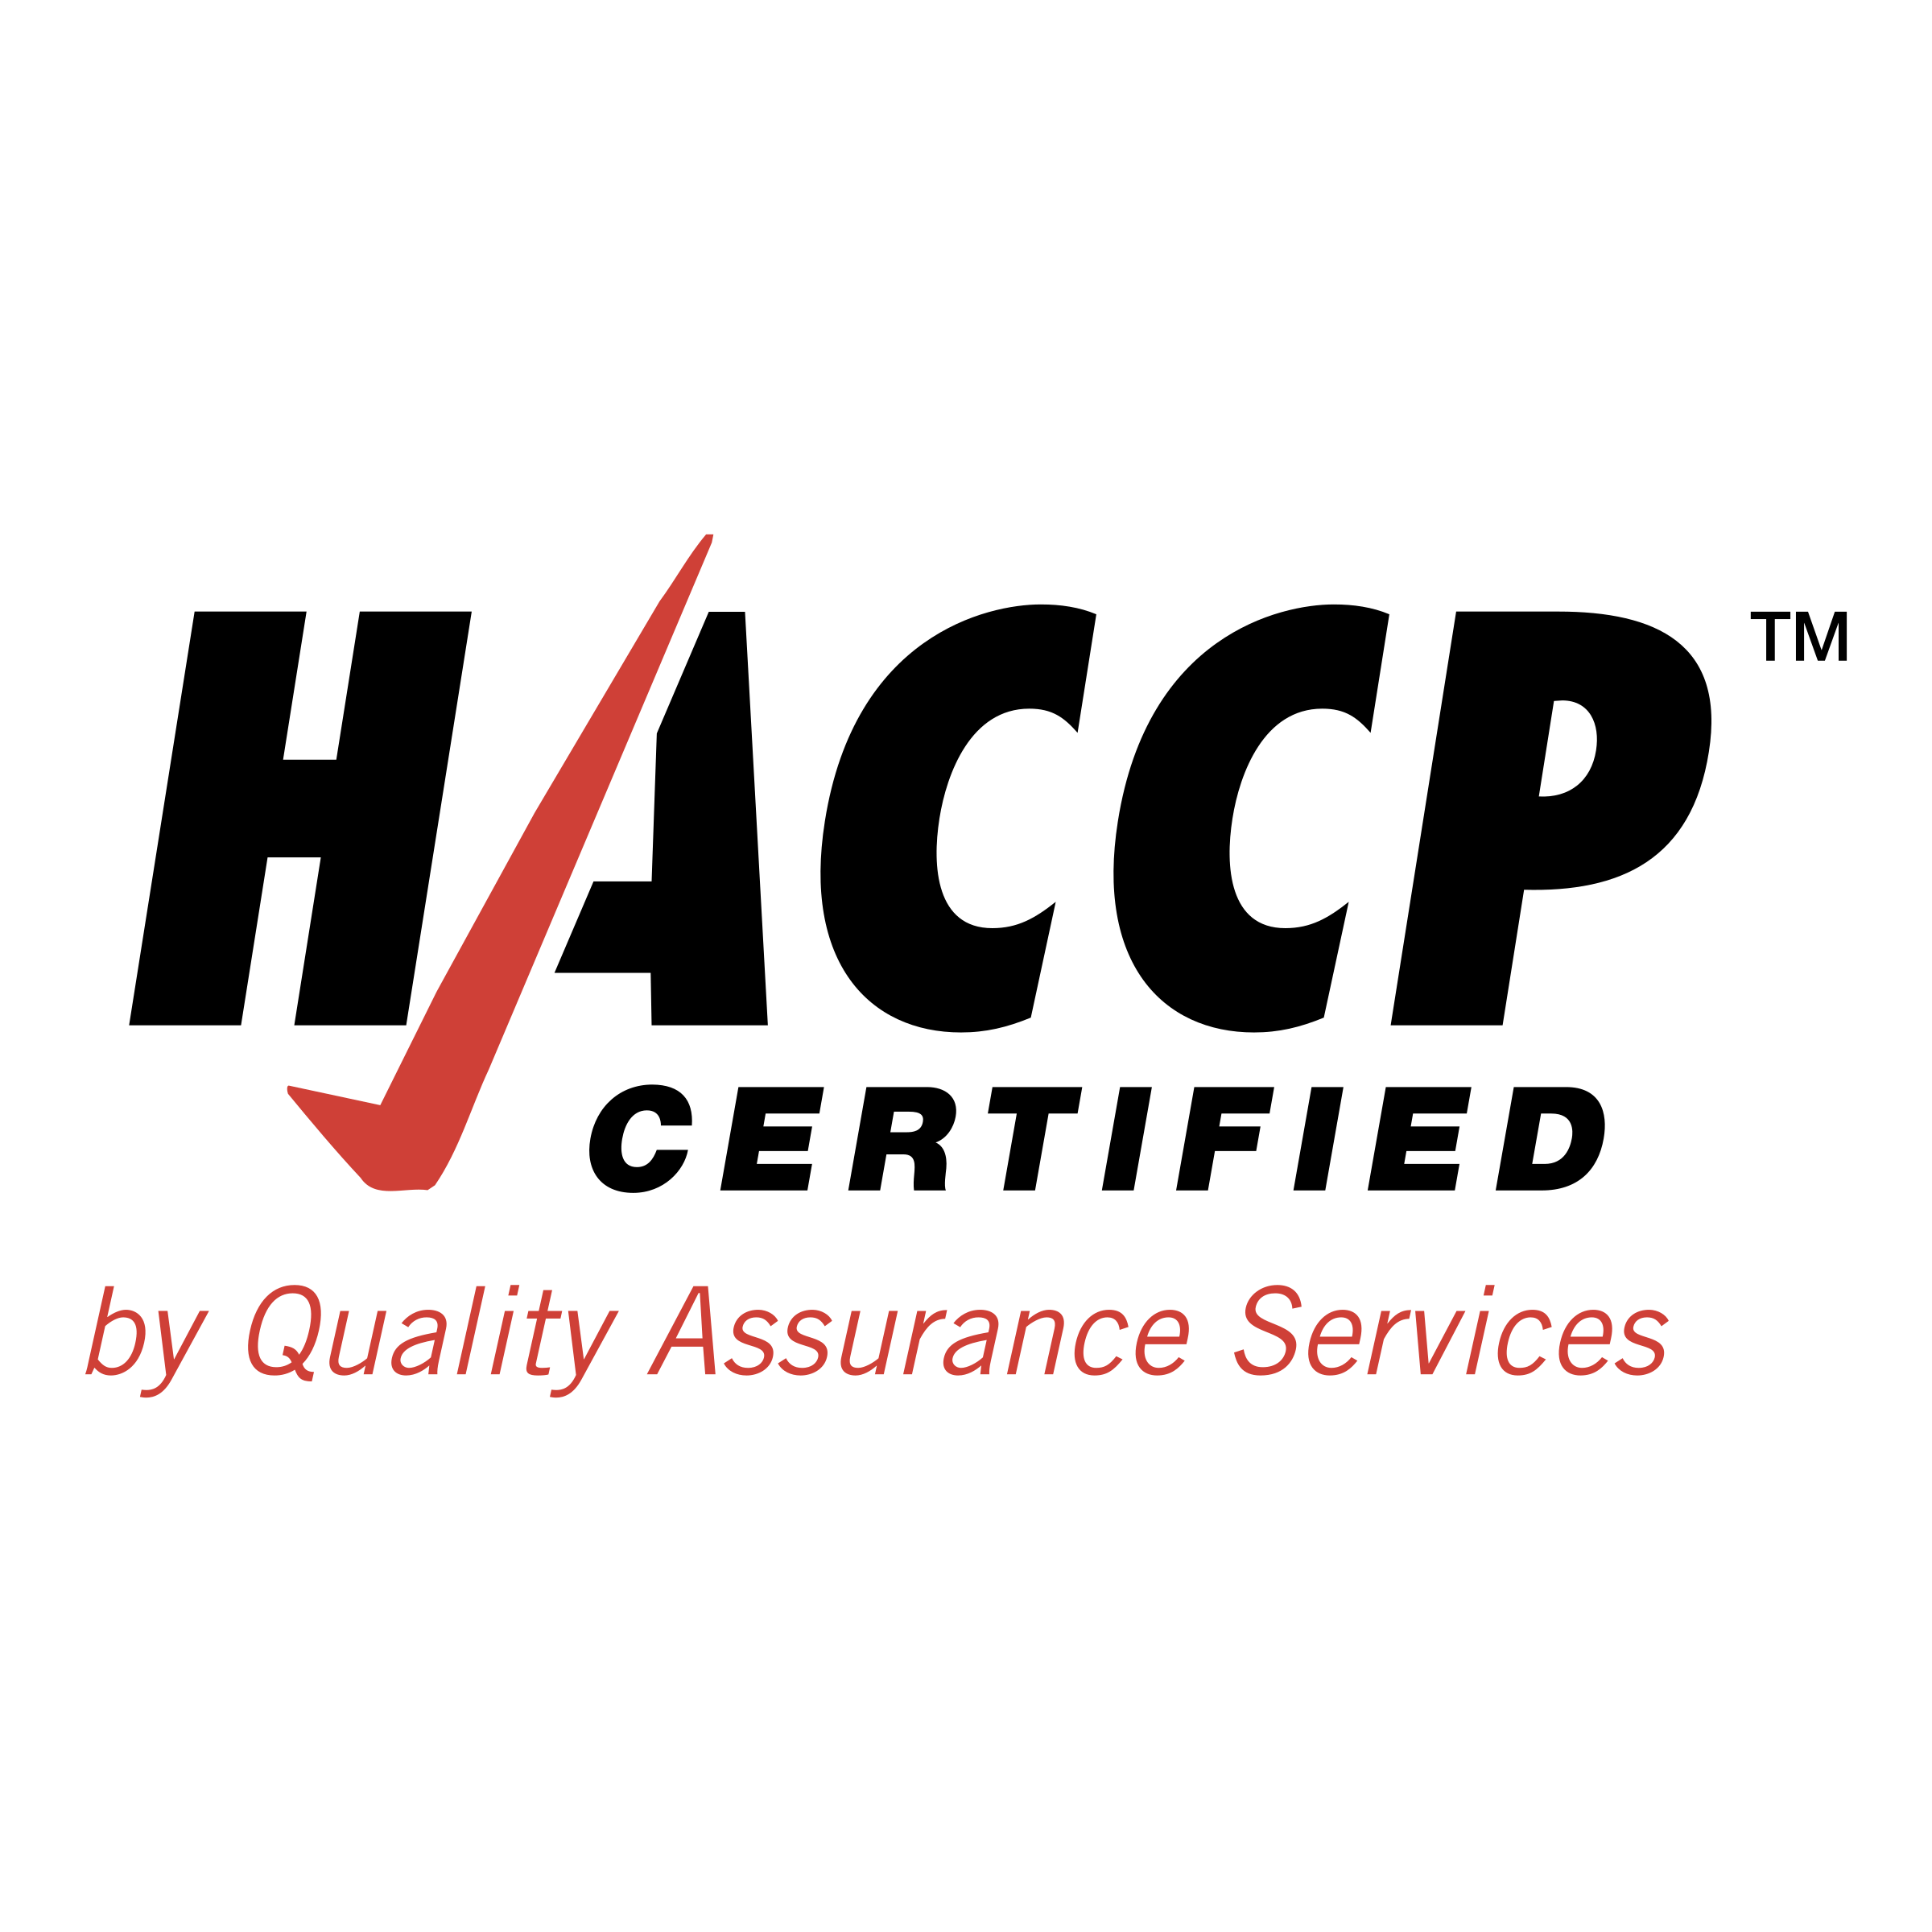 HACCP Logo - HACCP Logo PNG Transparent & SVG Vector